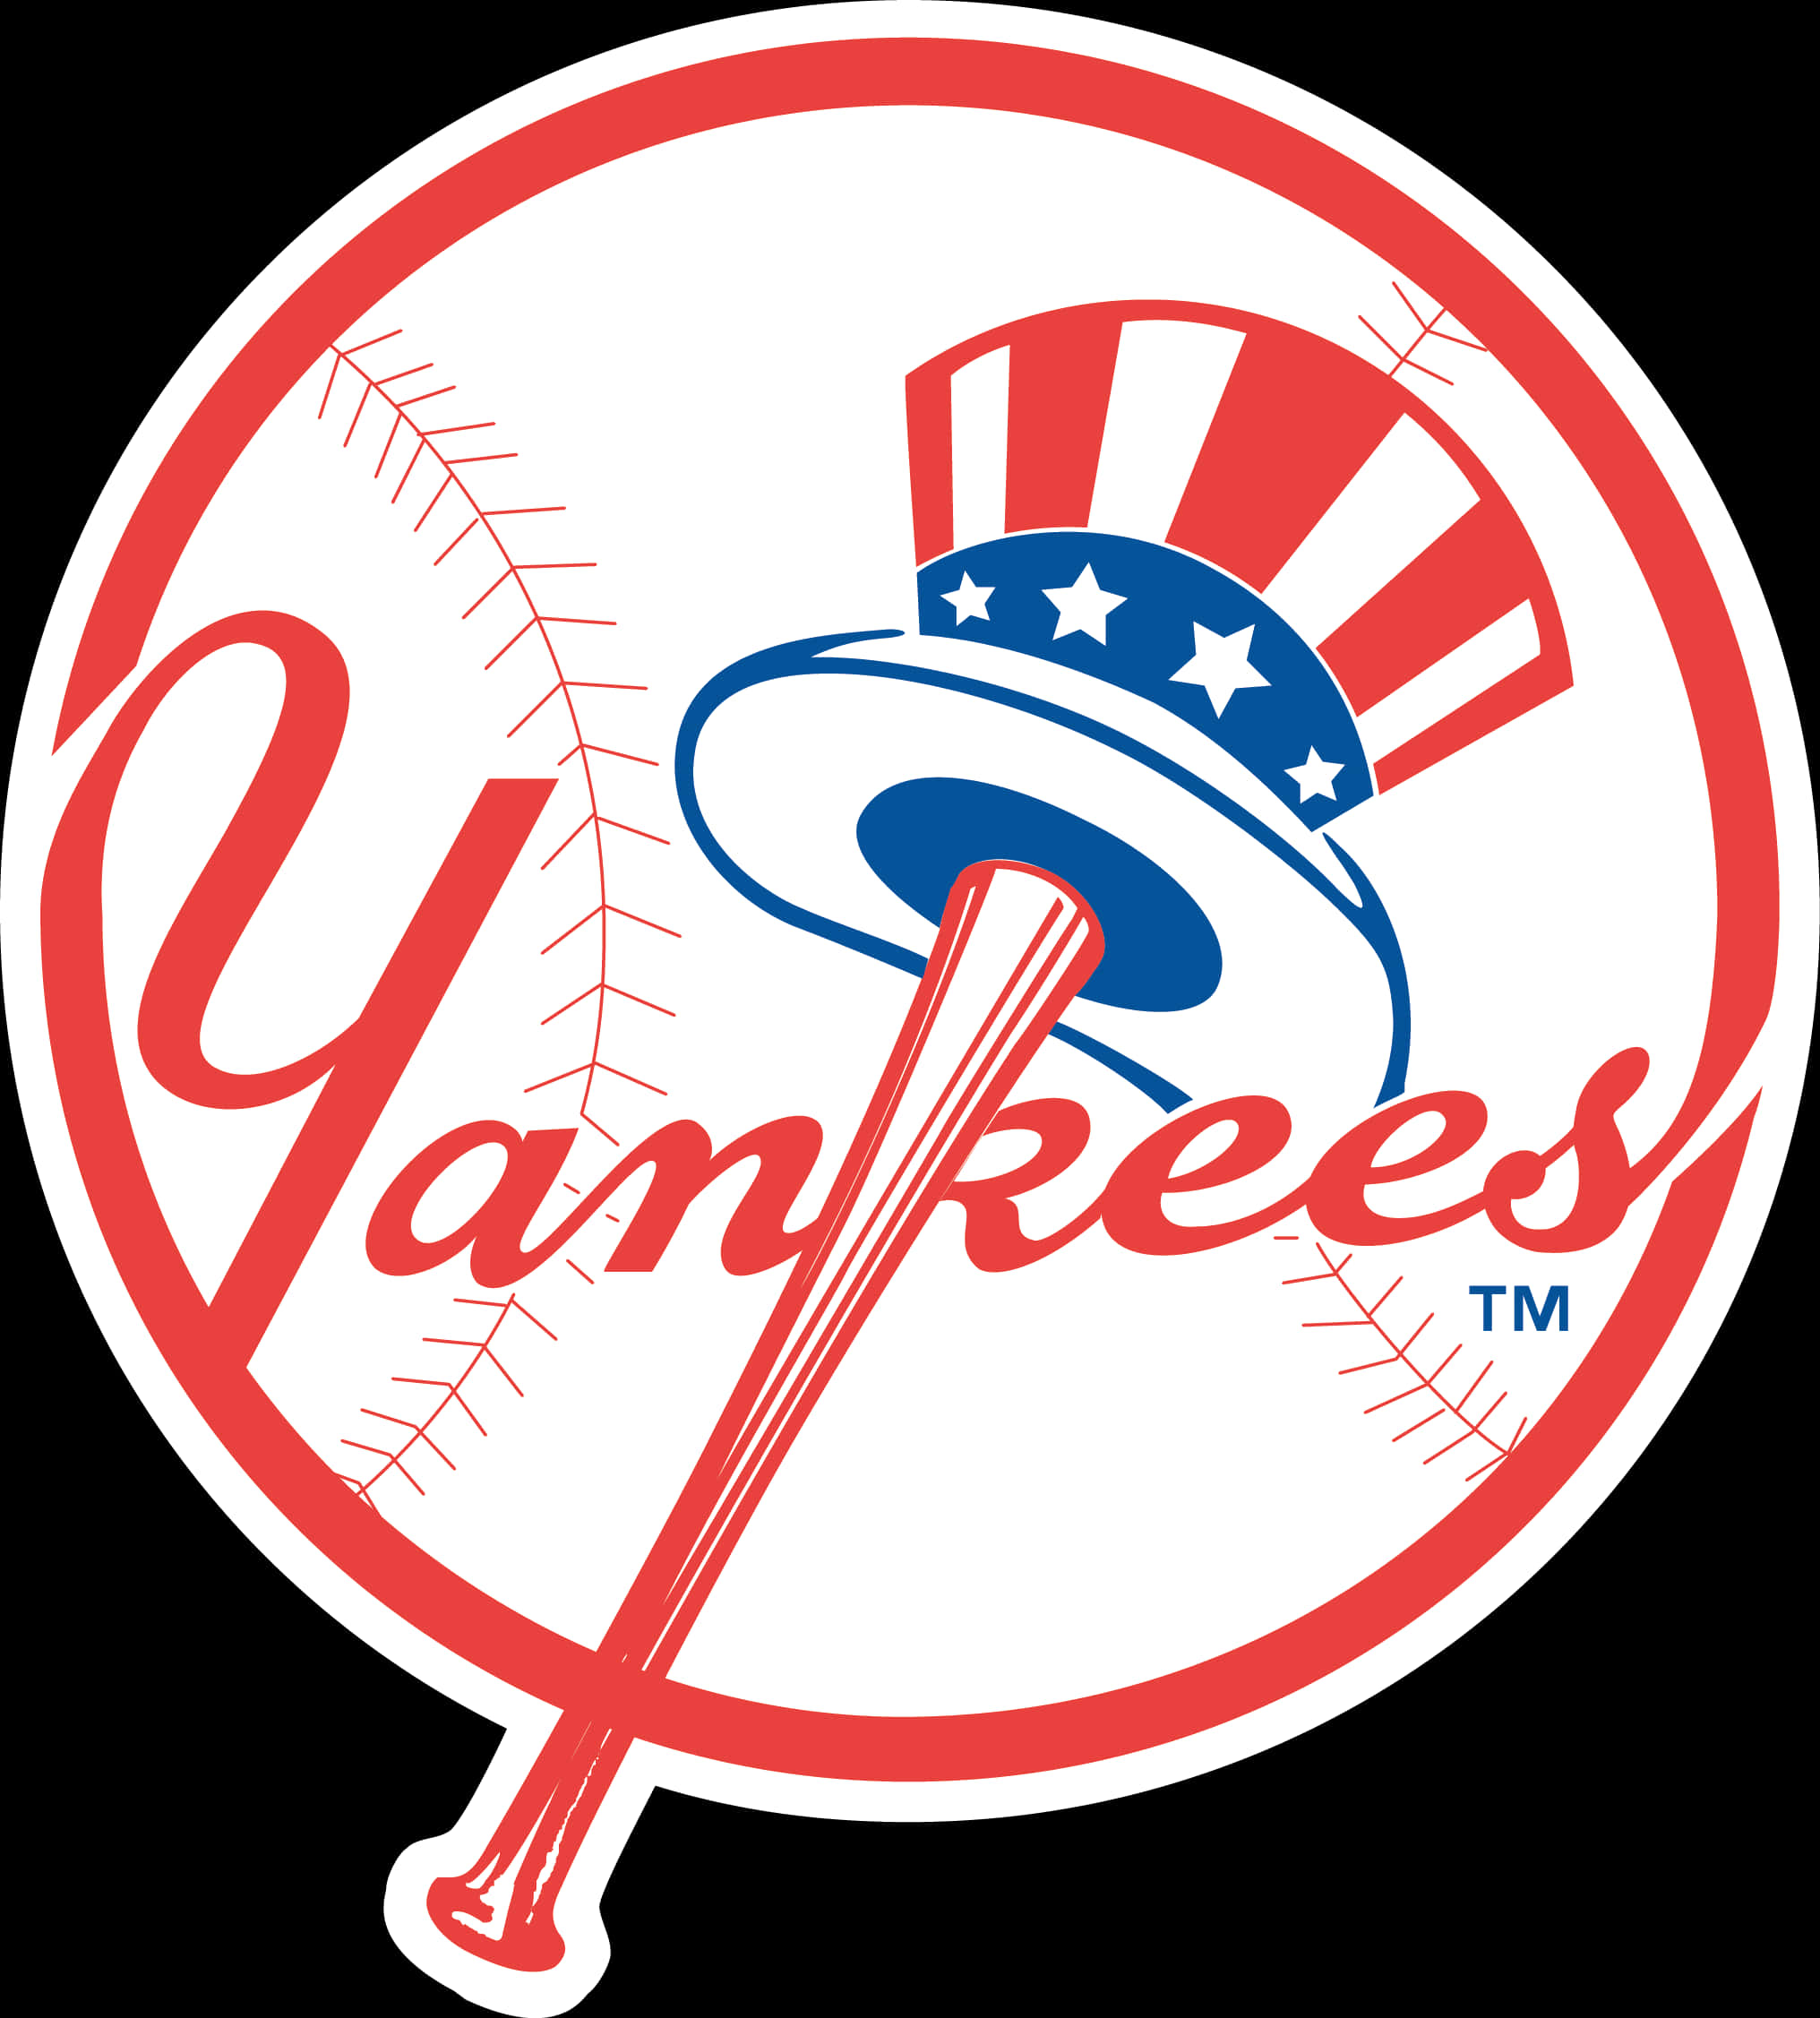 Yankees Baseball Team Logo PNG image